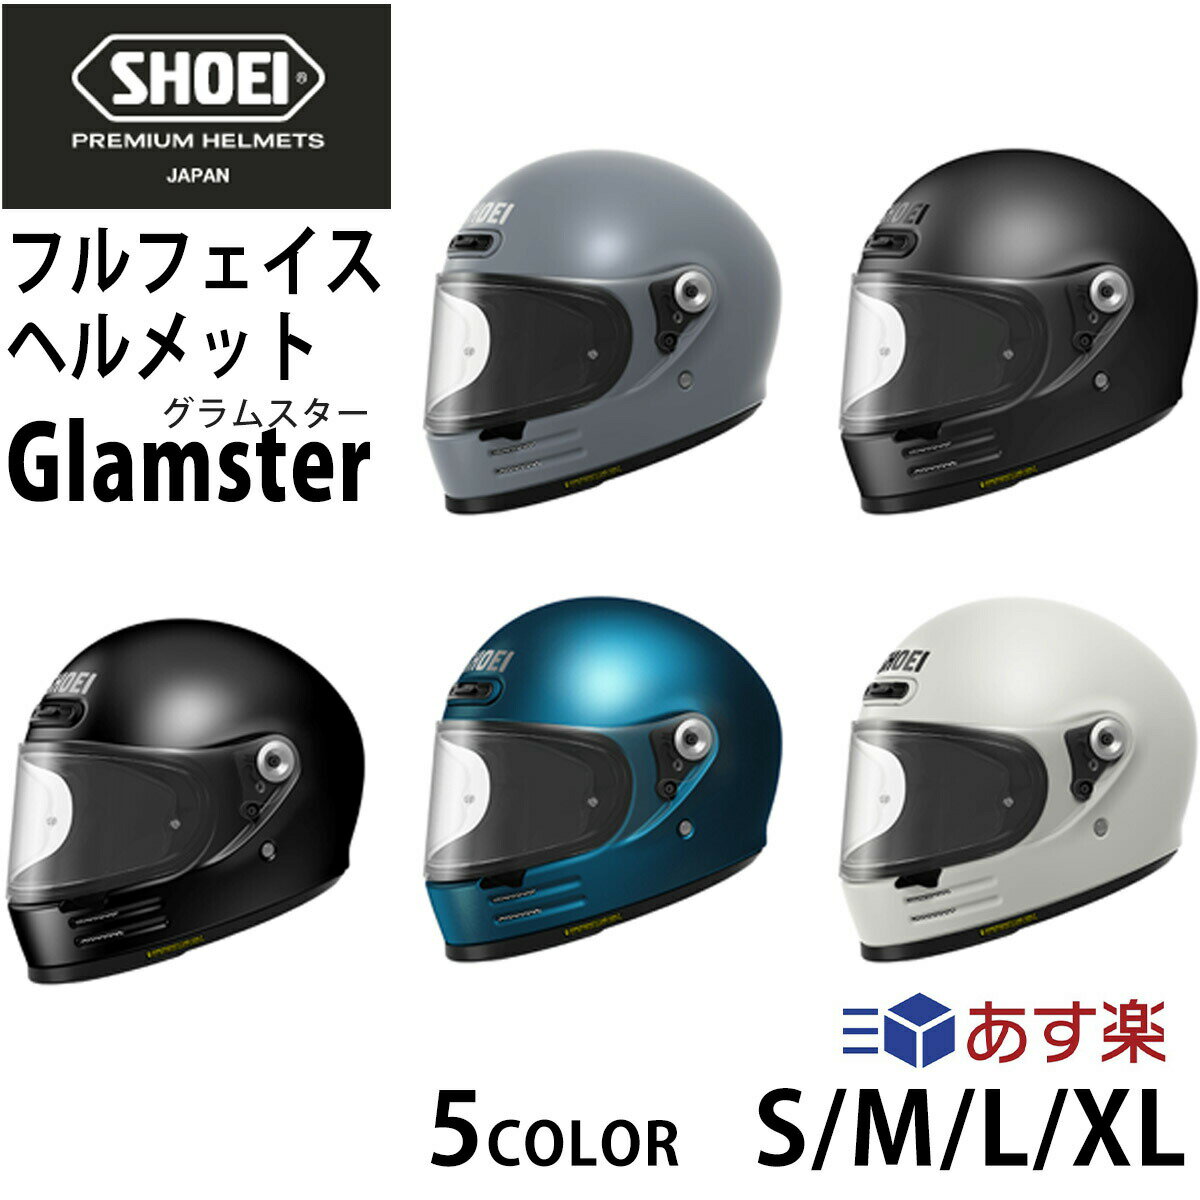 SHOEIフルフェイスヘルメットGlamsterグラムスター安心の日本製正規品SHOEI品質Made